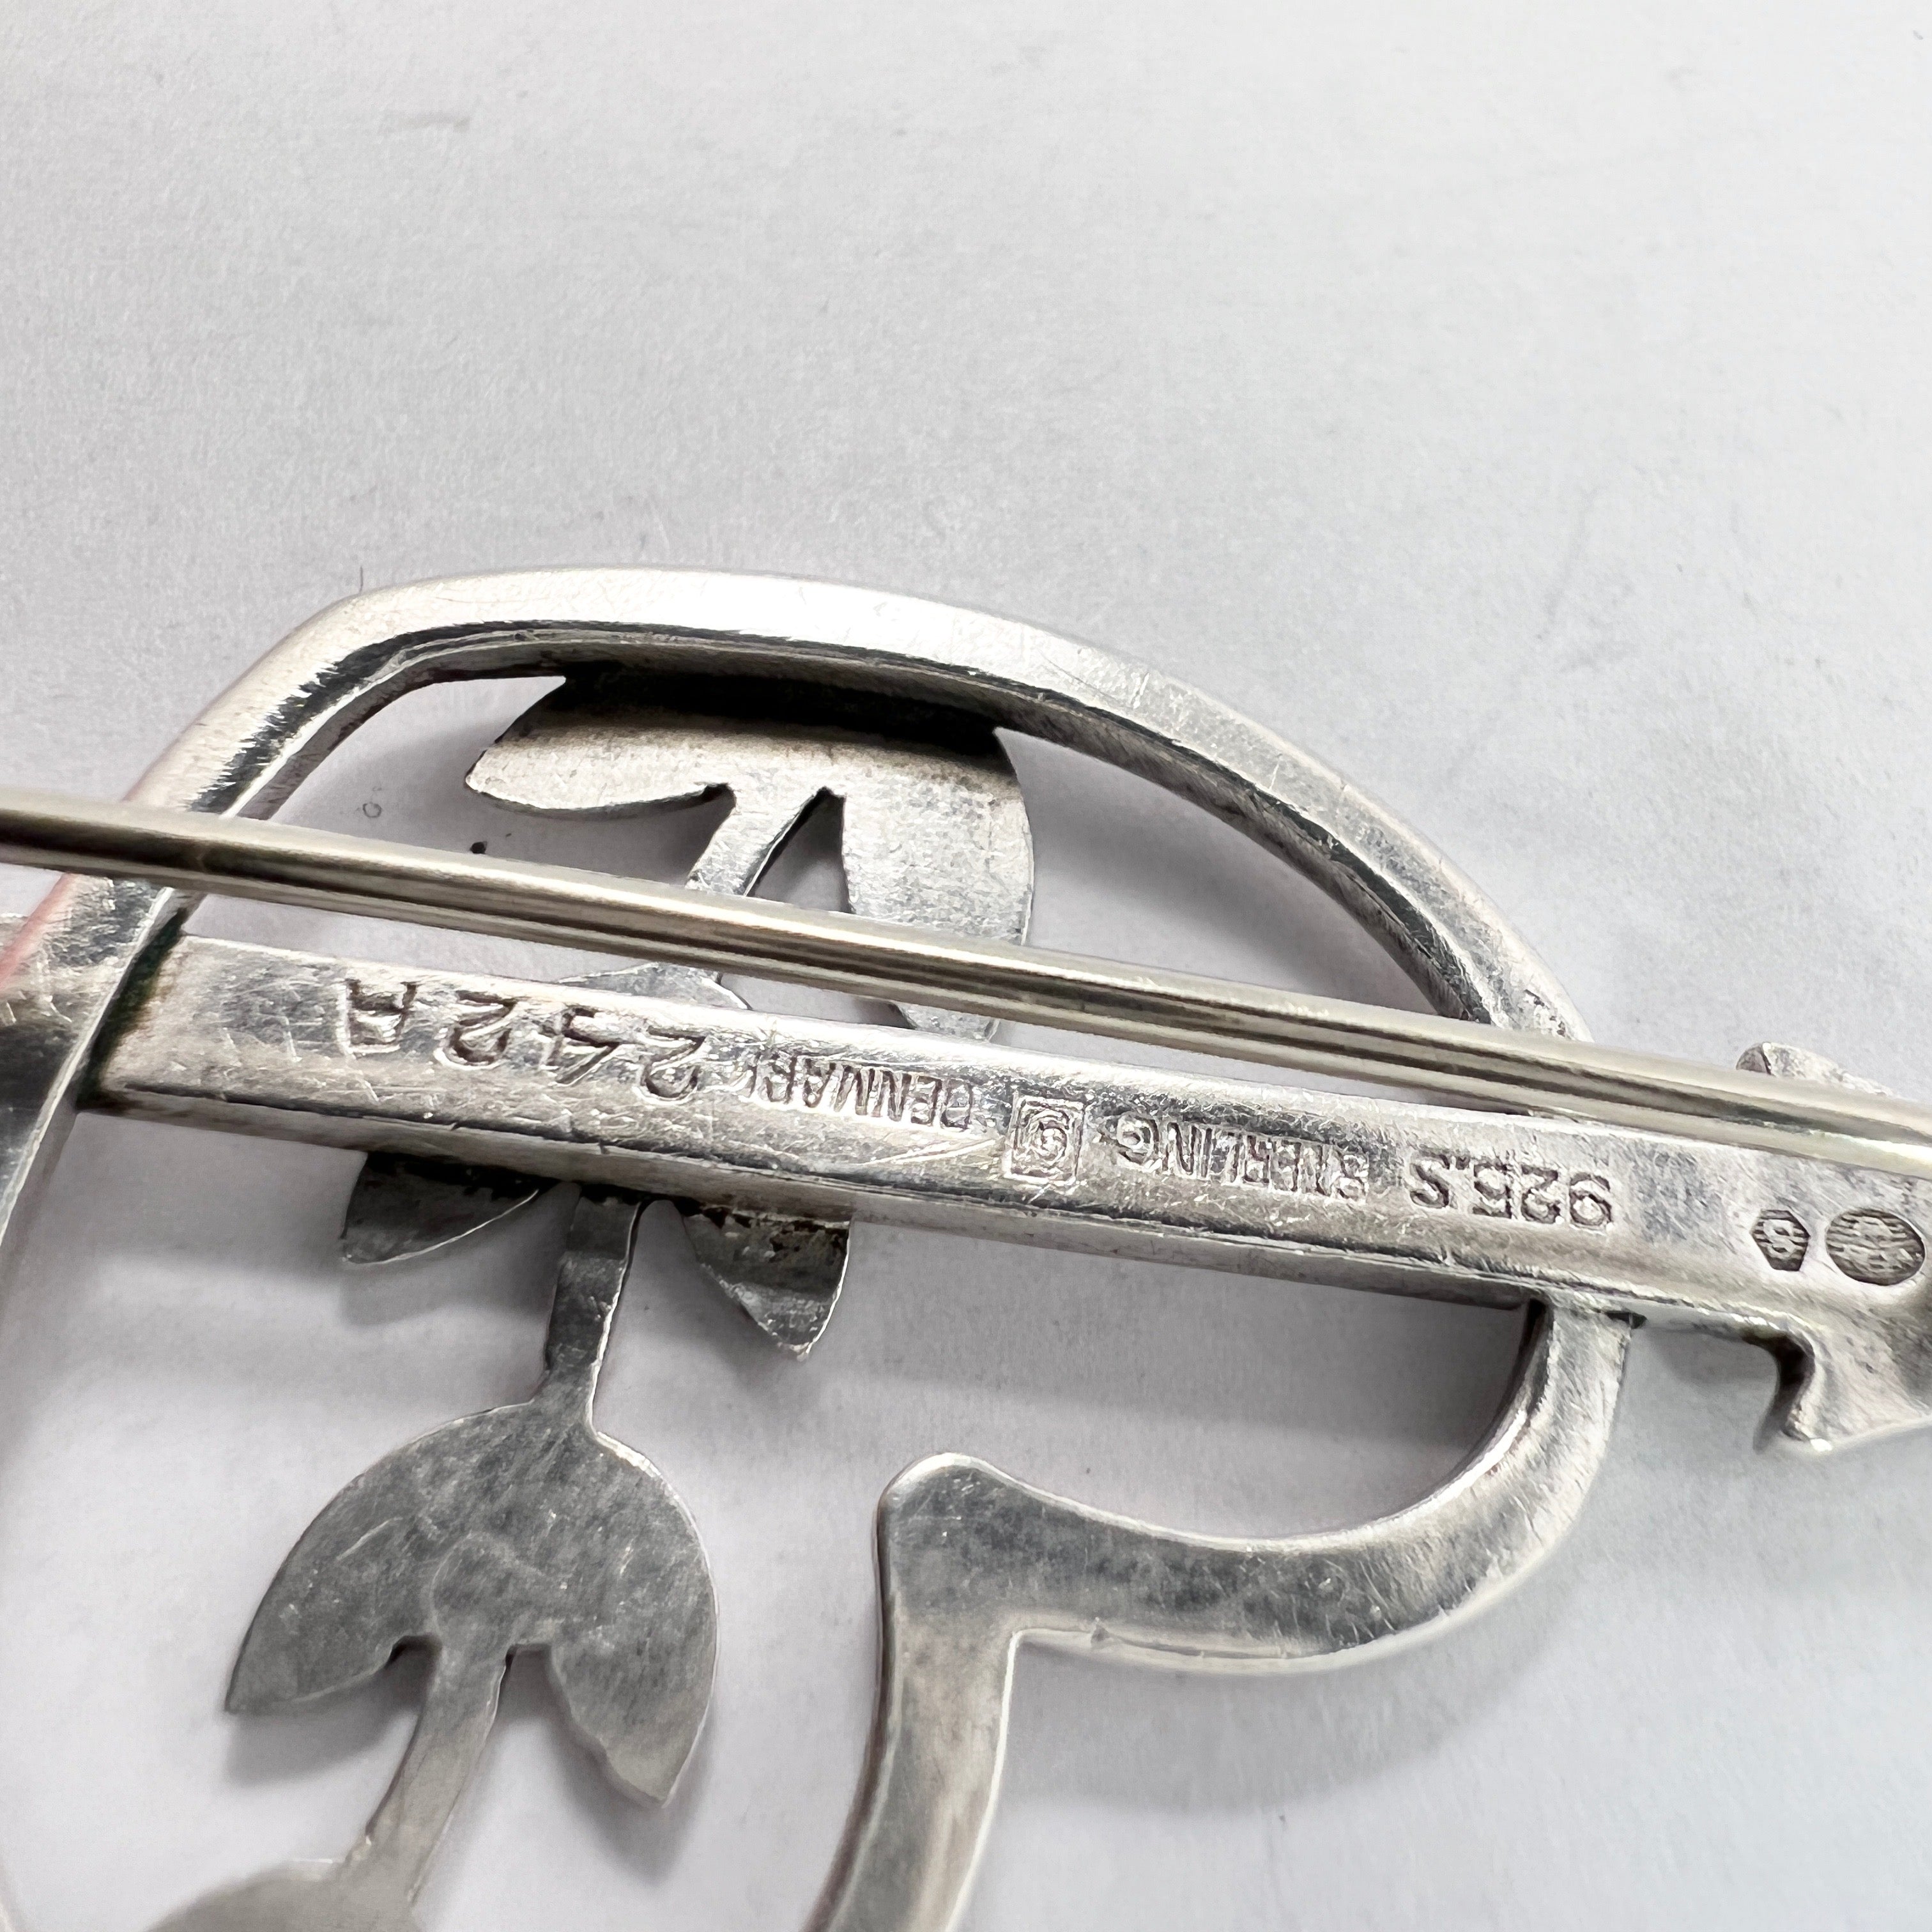 Georg Jensen 1933-44. Vintage Sterling Silver Brooch. Design 242A by Arno Malinowski